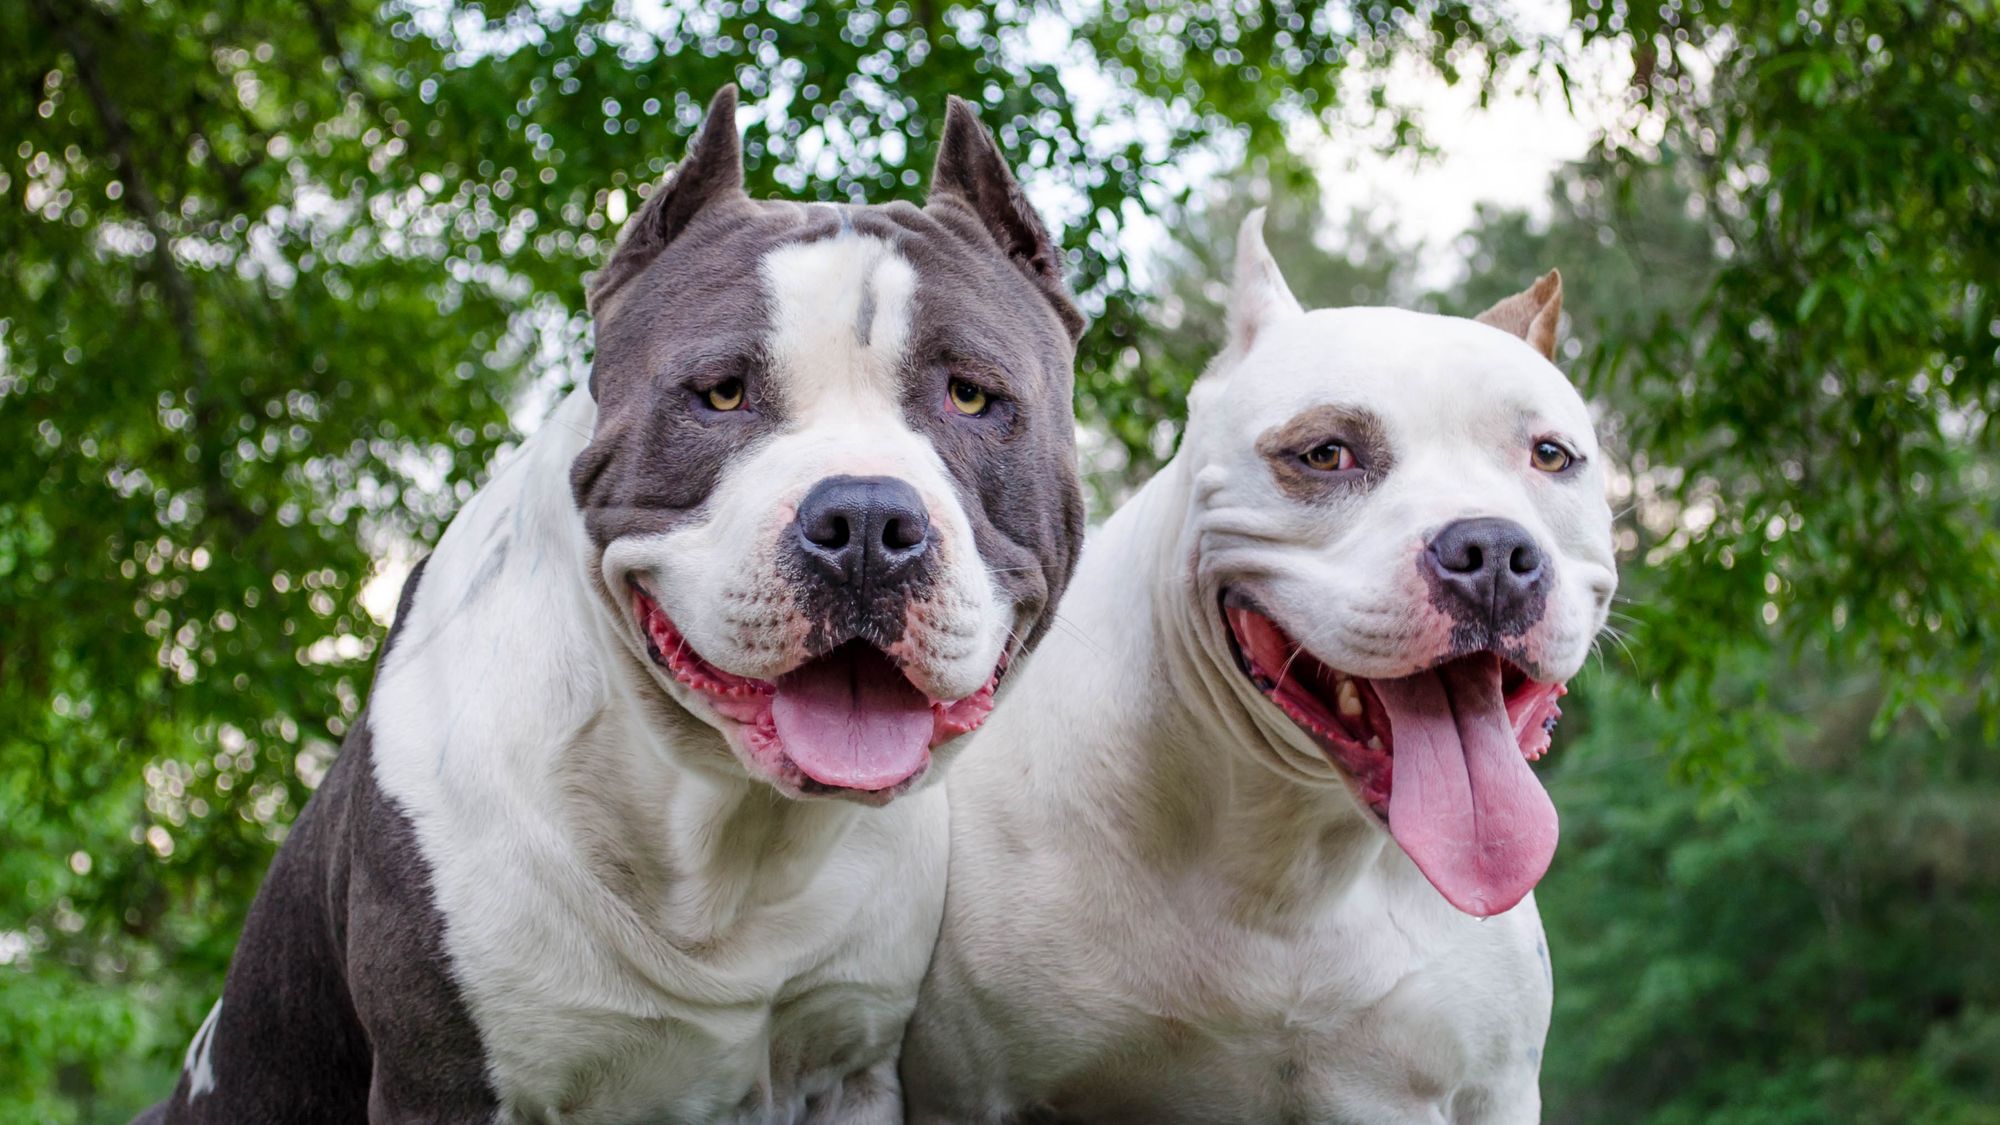 American Staffordshire Terrier vs Pitbull similarities